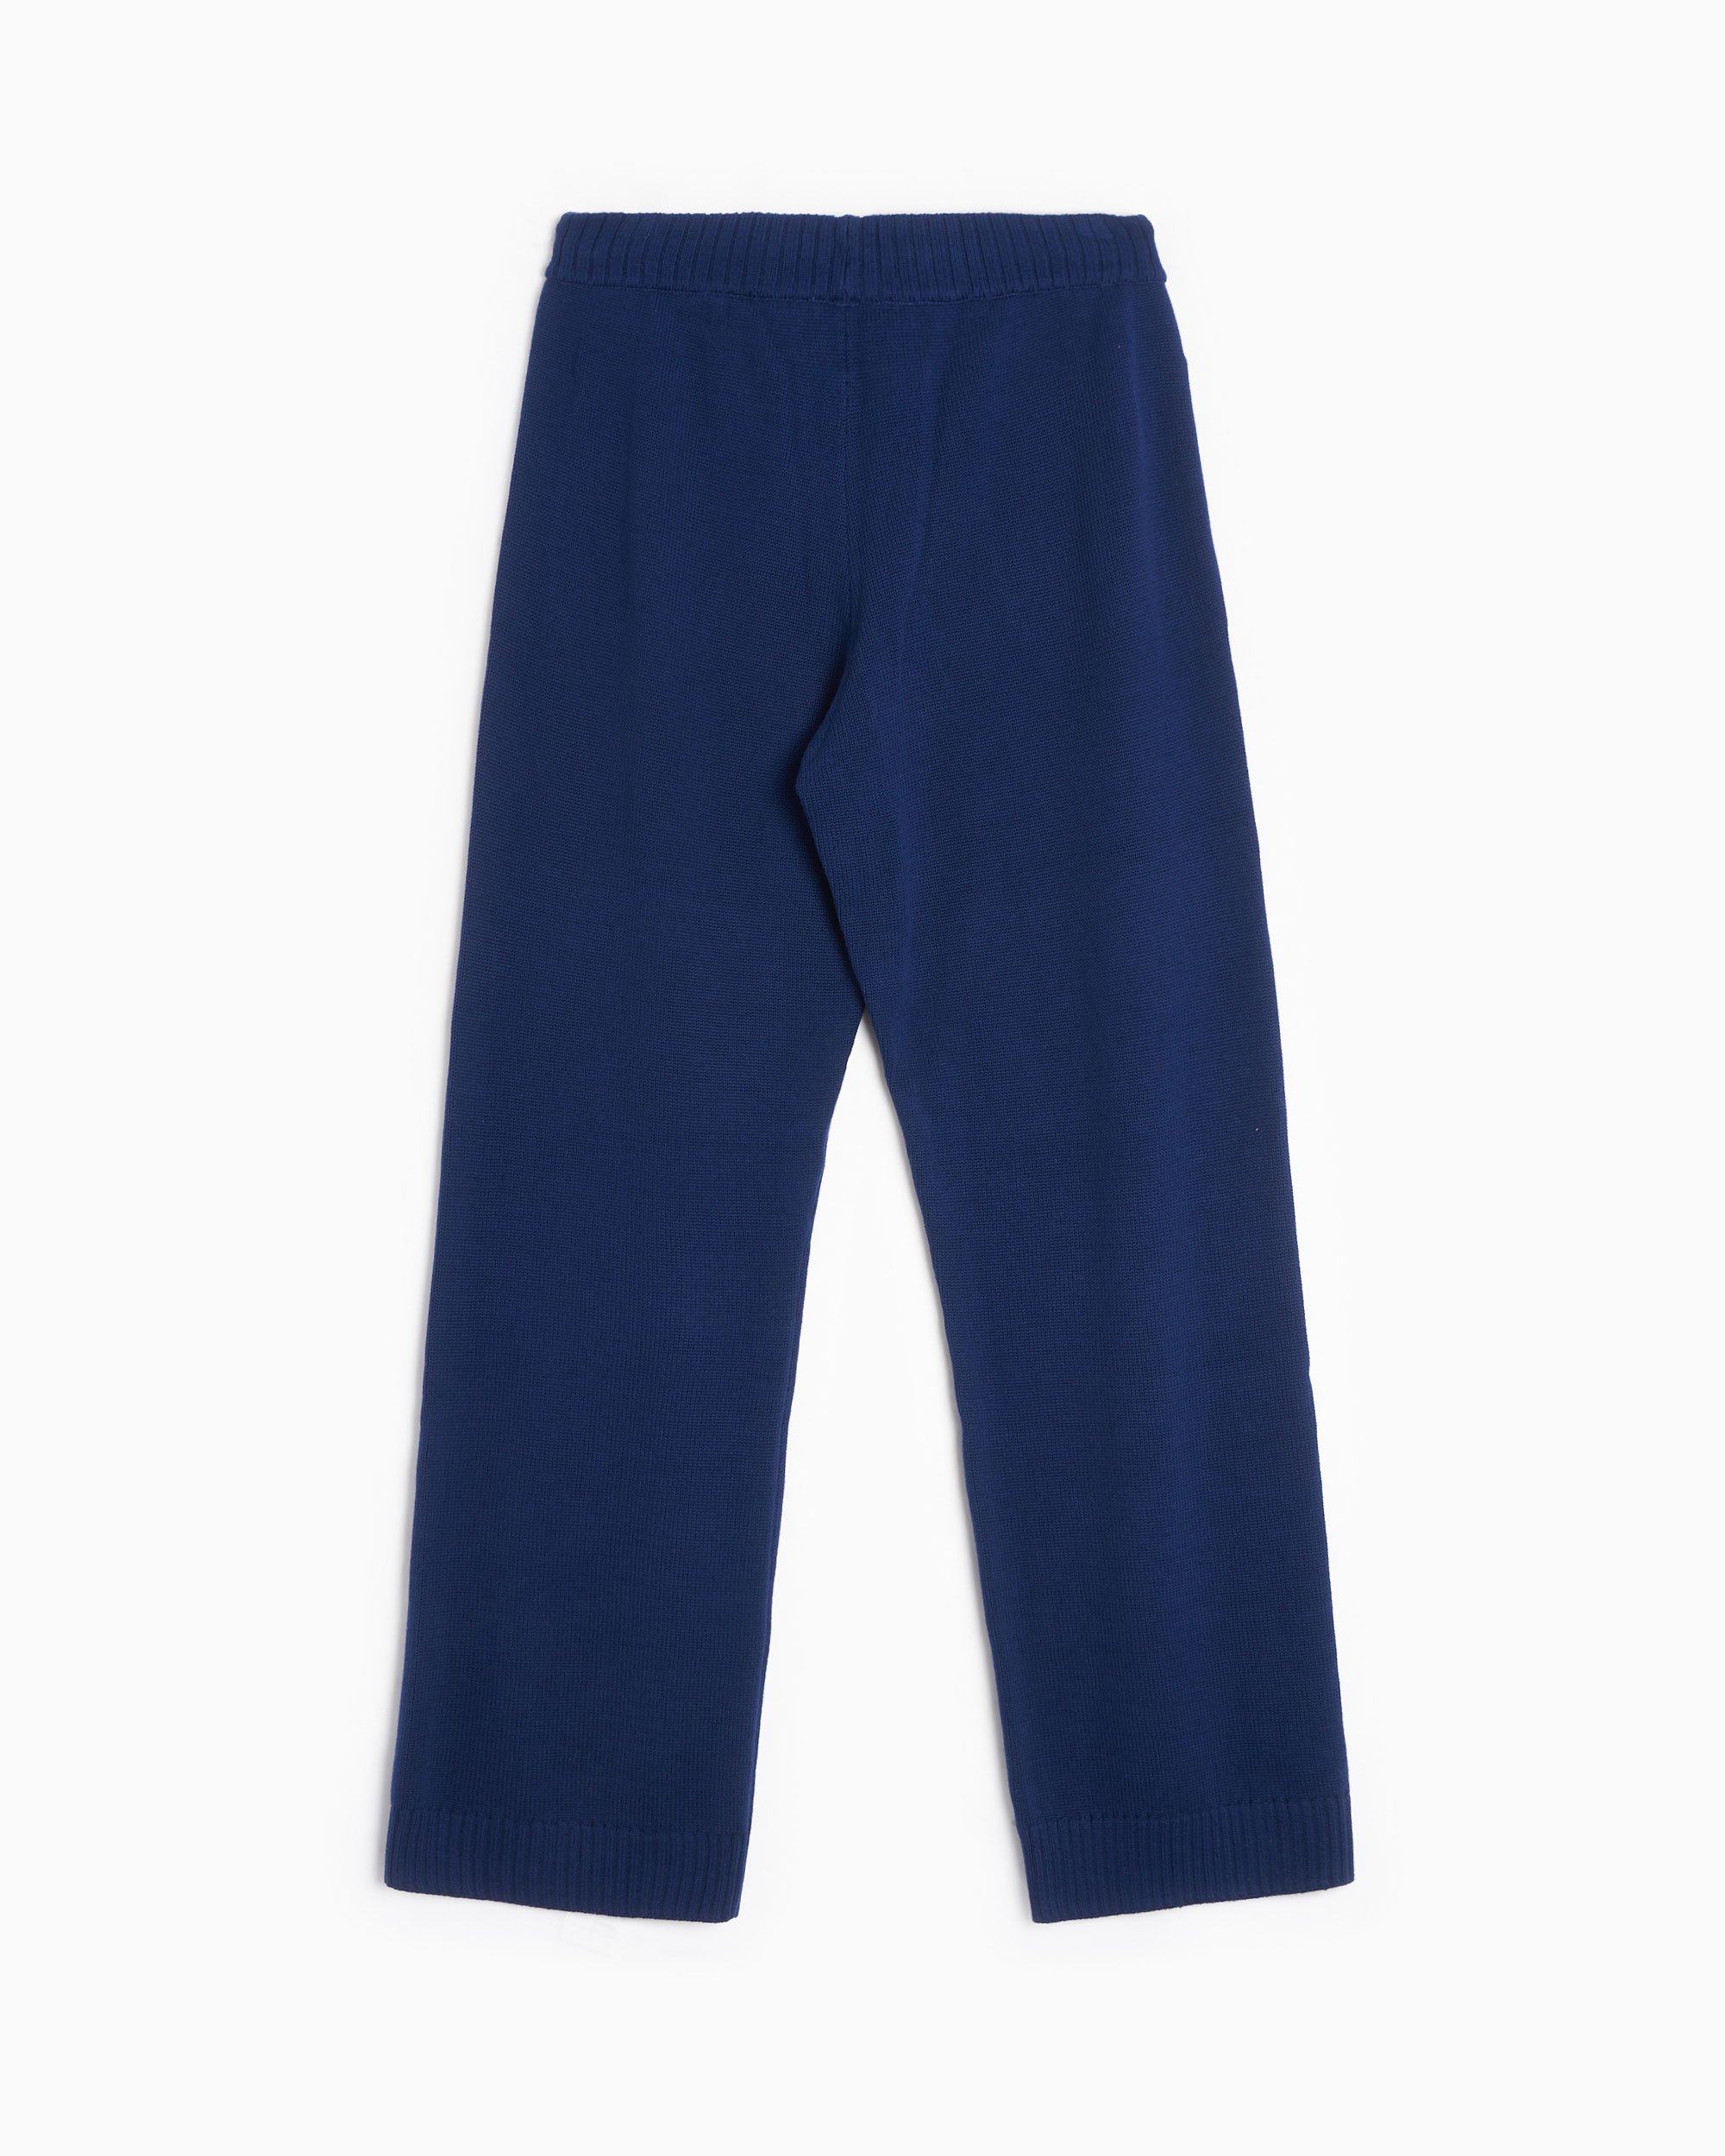 ADIDAS ORIGINALS FIREBIRD TP, Navy blue Men's Casual Pants